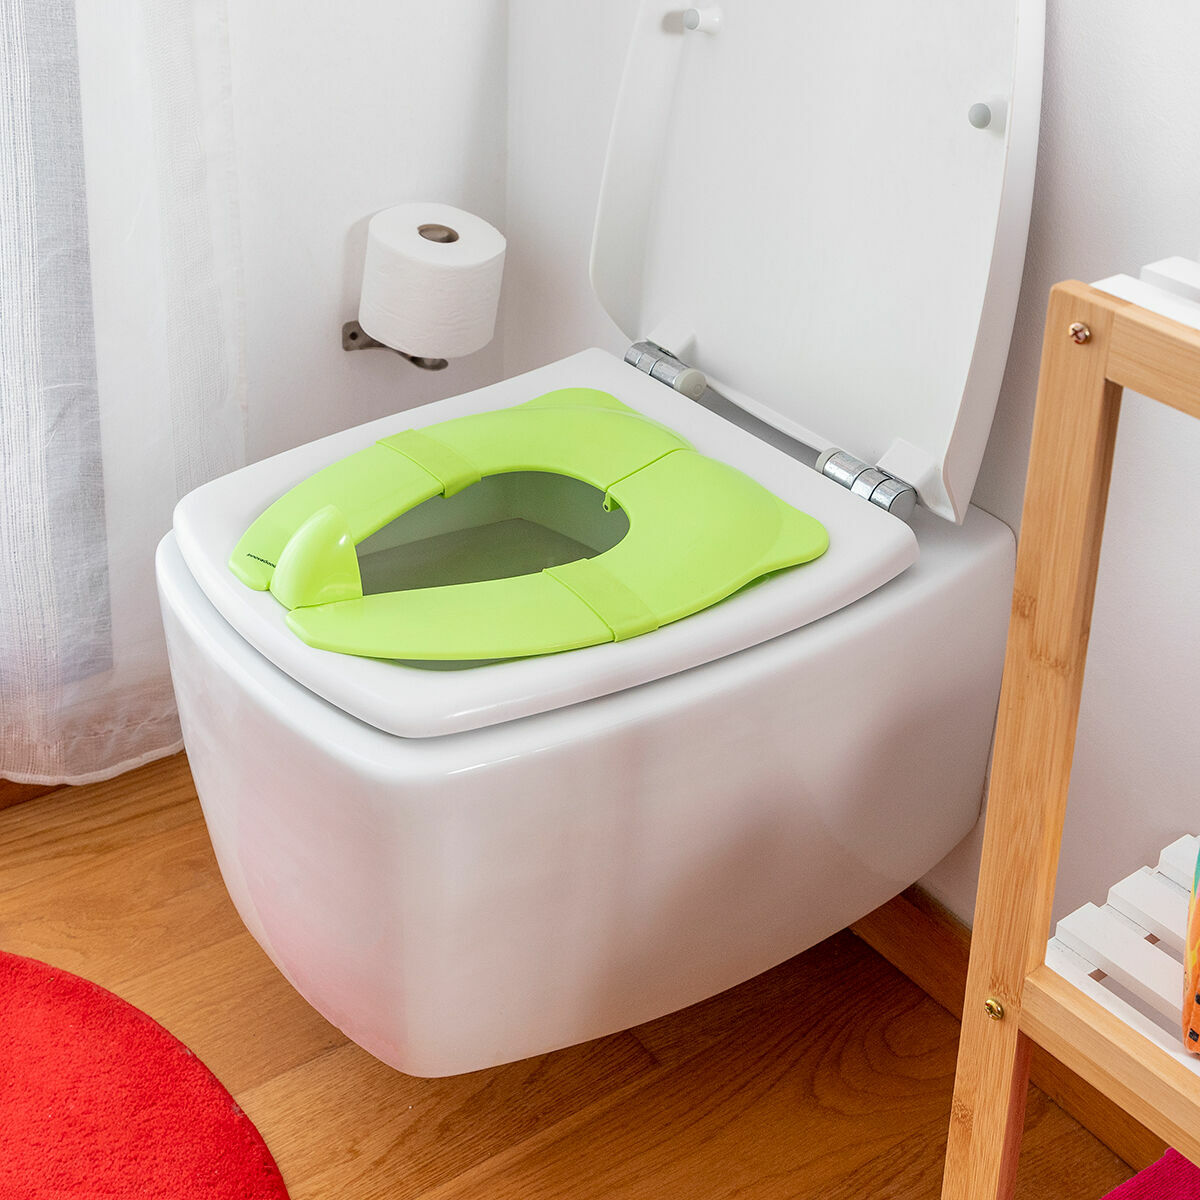 Kaufe Klappbarer Kinder-Toilettensitz Foltry InnovaGoods bei AWK Flagship um € 29.00